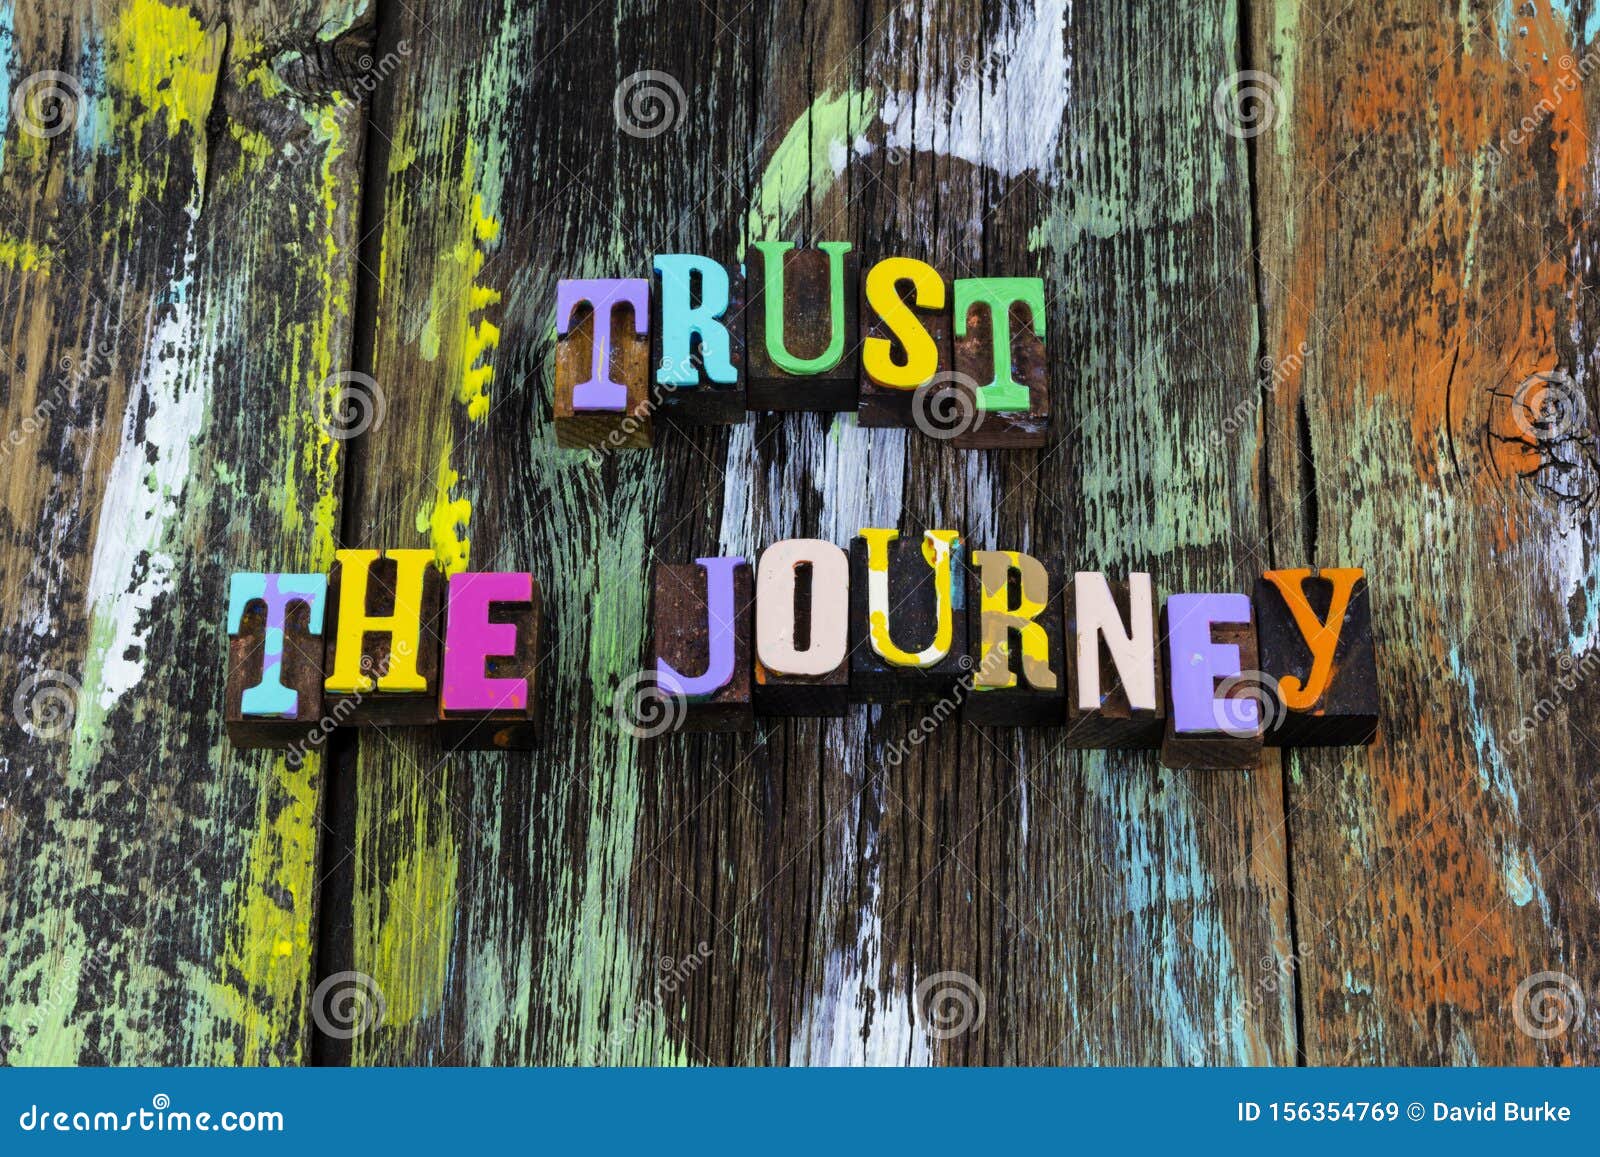 trust journey experience trip believe yourself challenge positive life